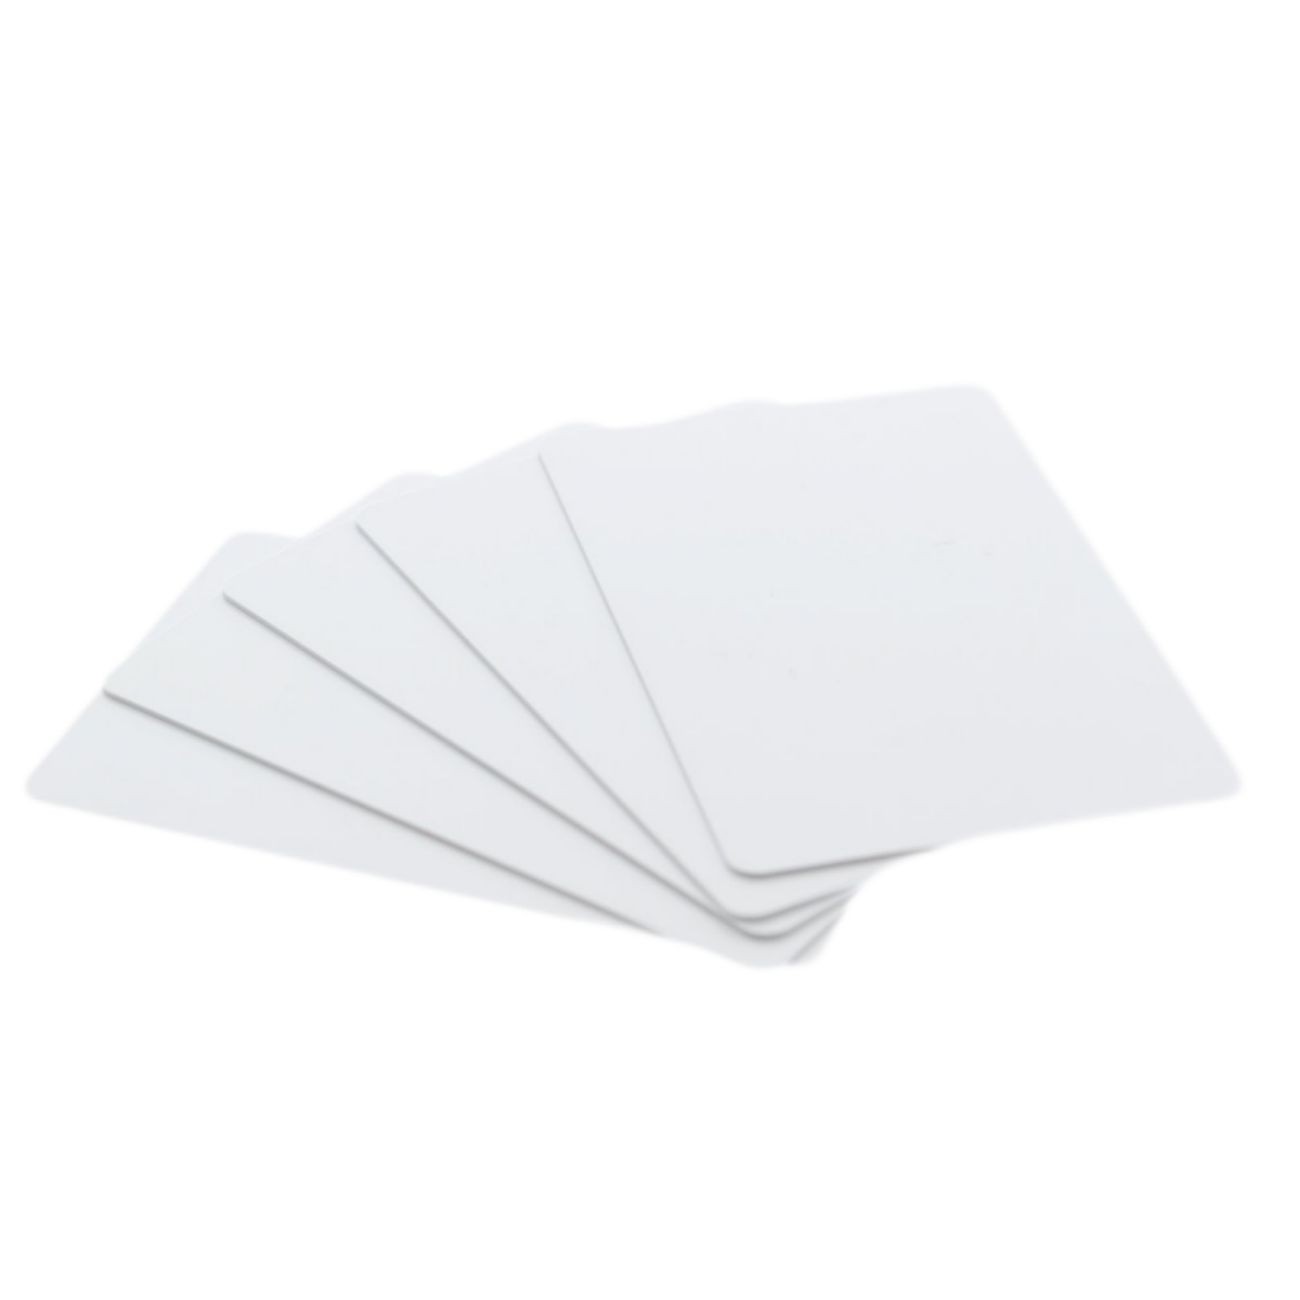 High quality inkjet printable white pvc sheet for making plastic card